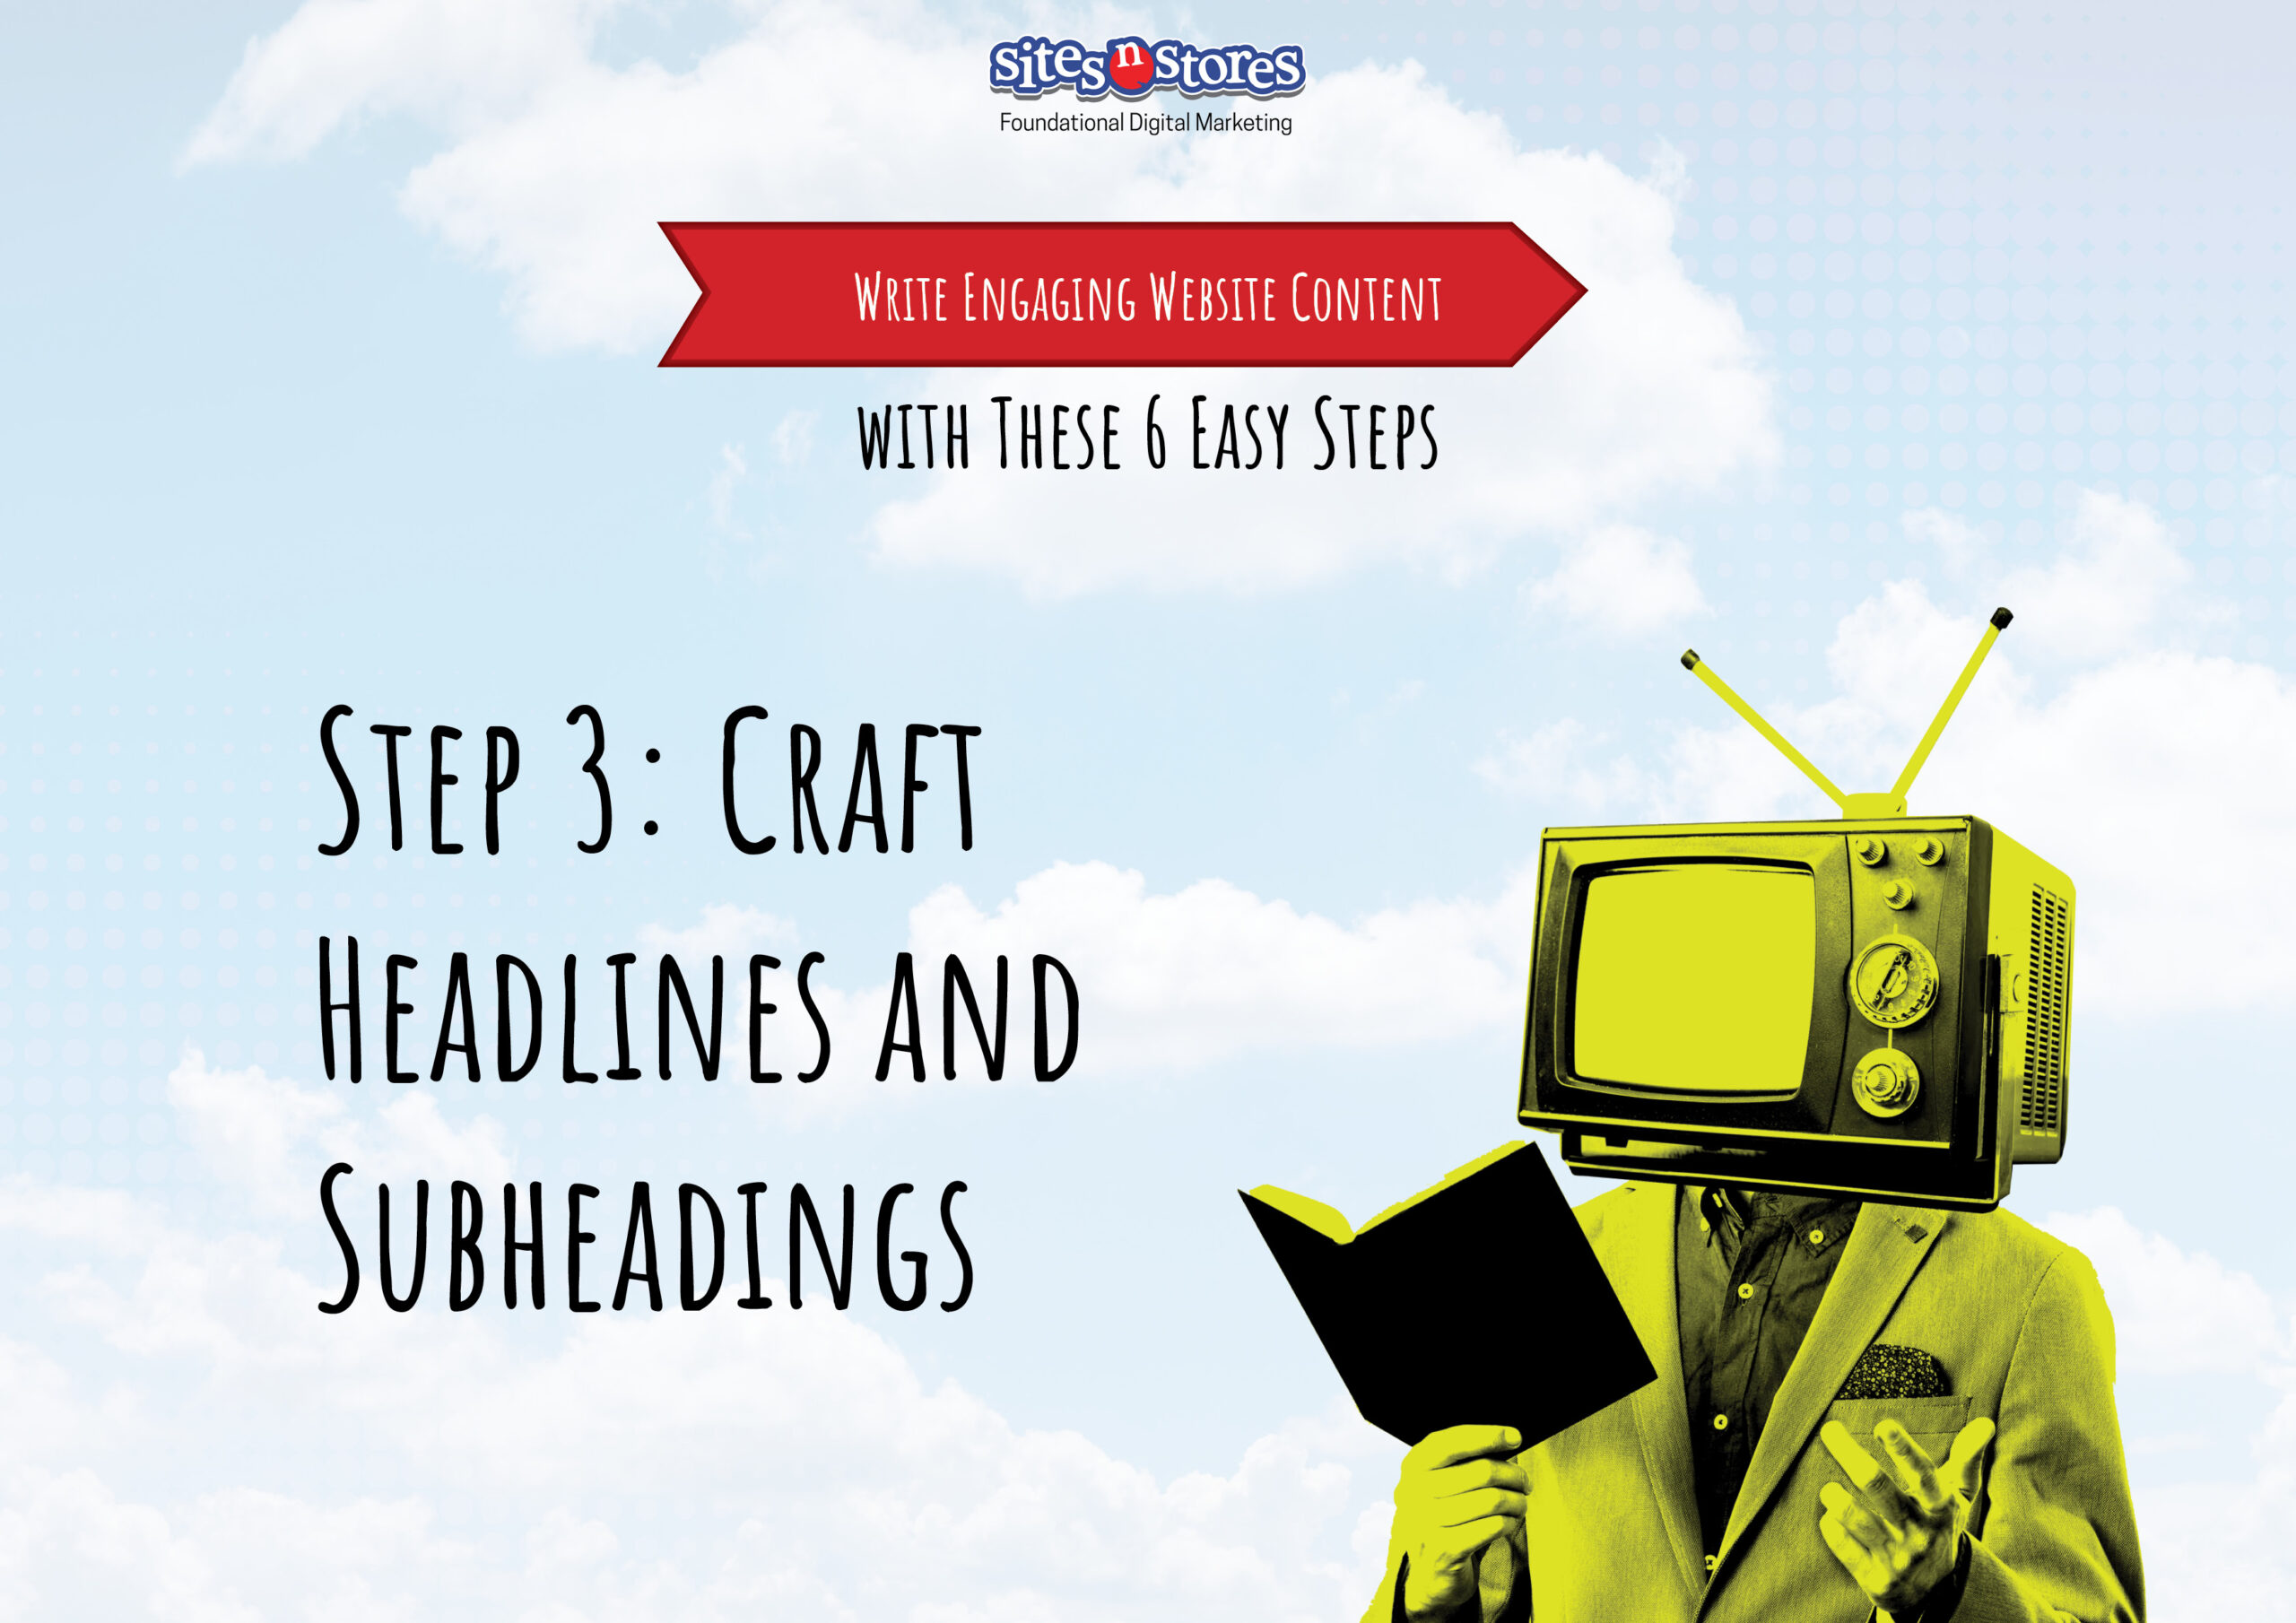 Step 3: Craft Headlines and Subheadings